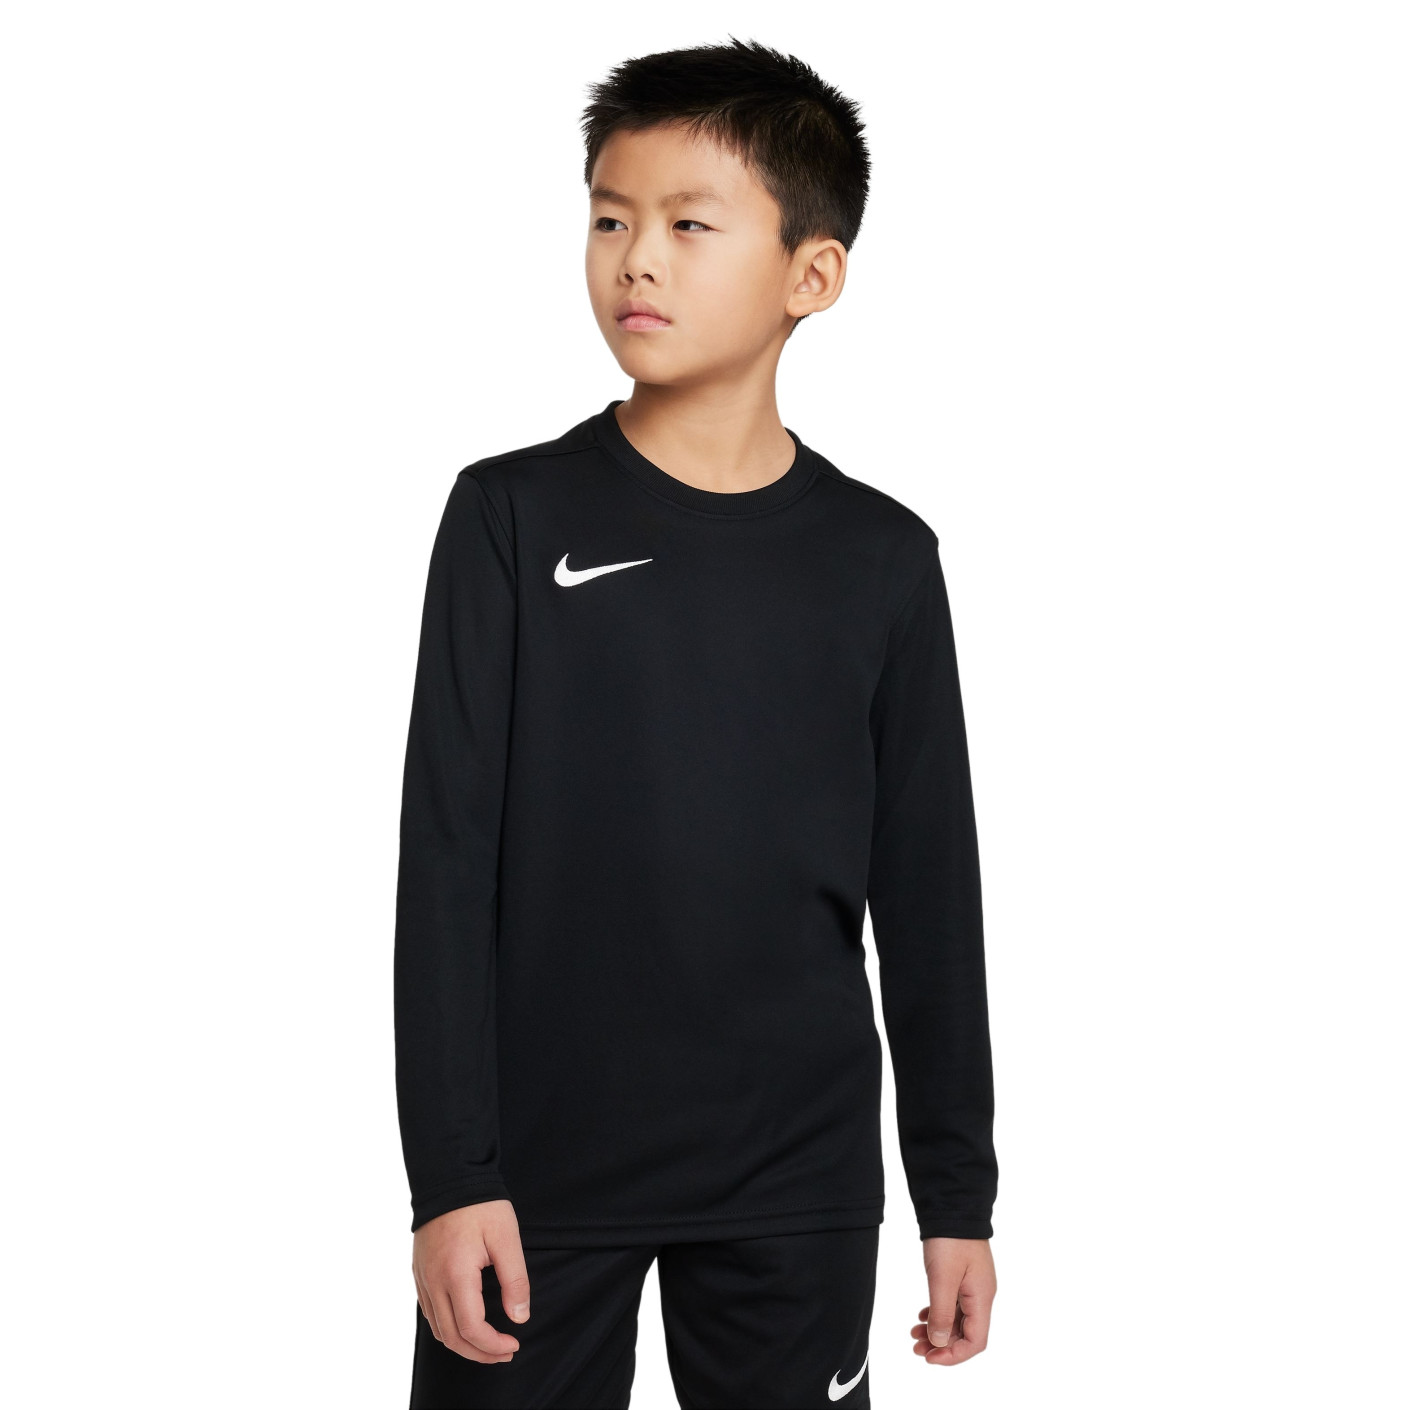 Nike Dry Park VII Kids Long Sleeve Football Shirt Black